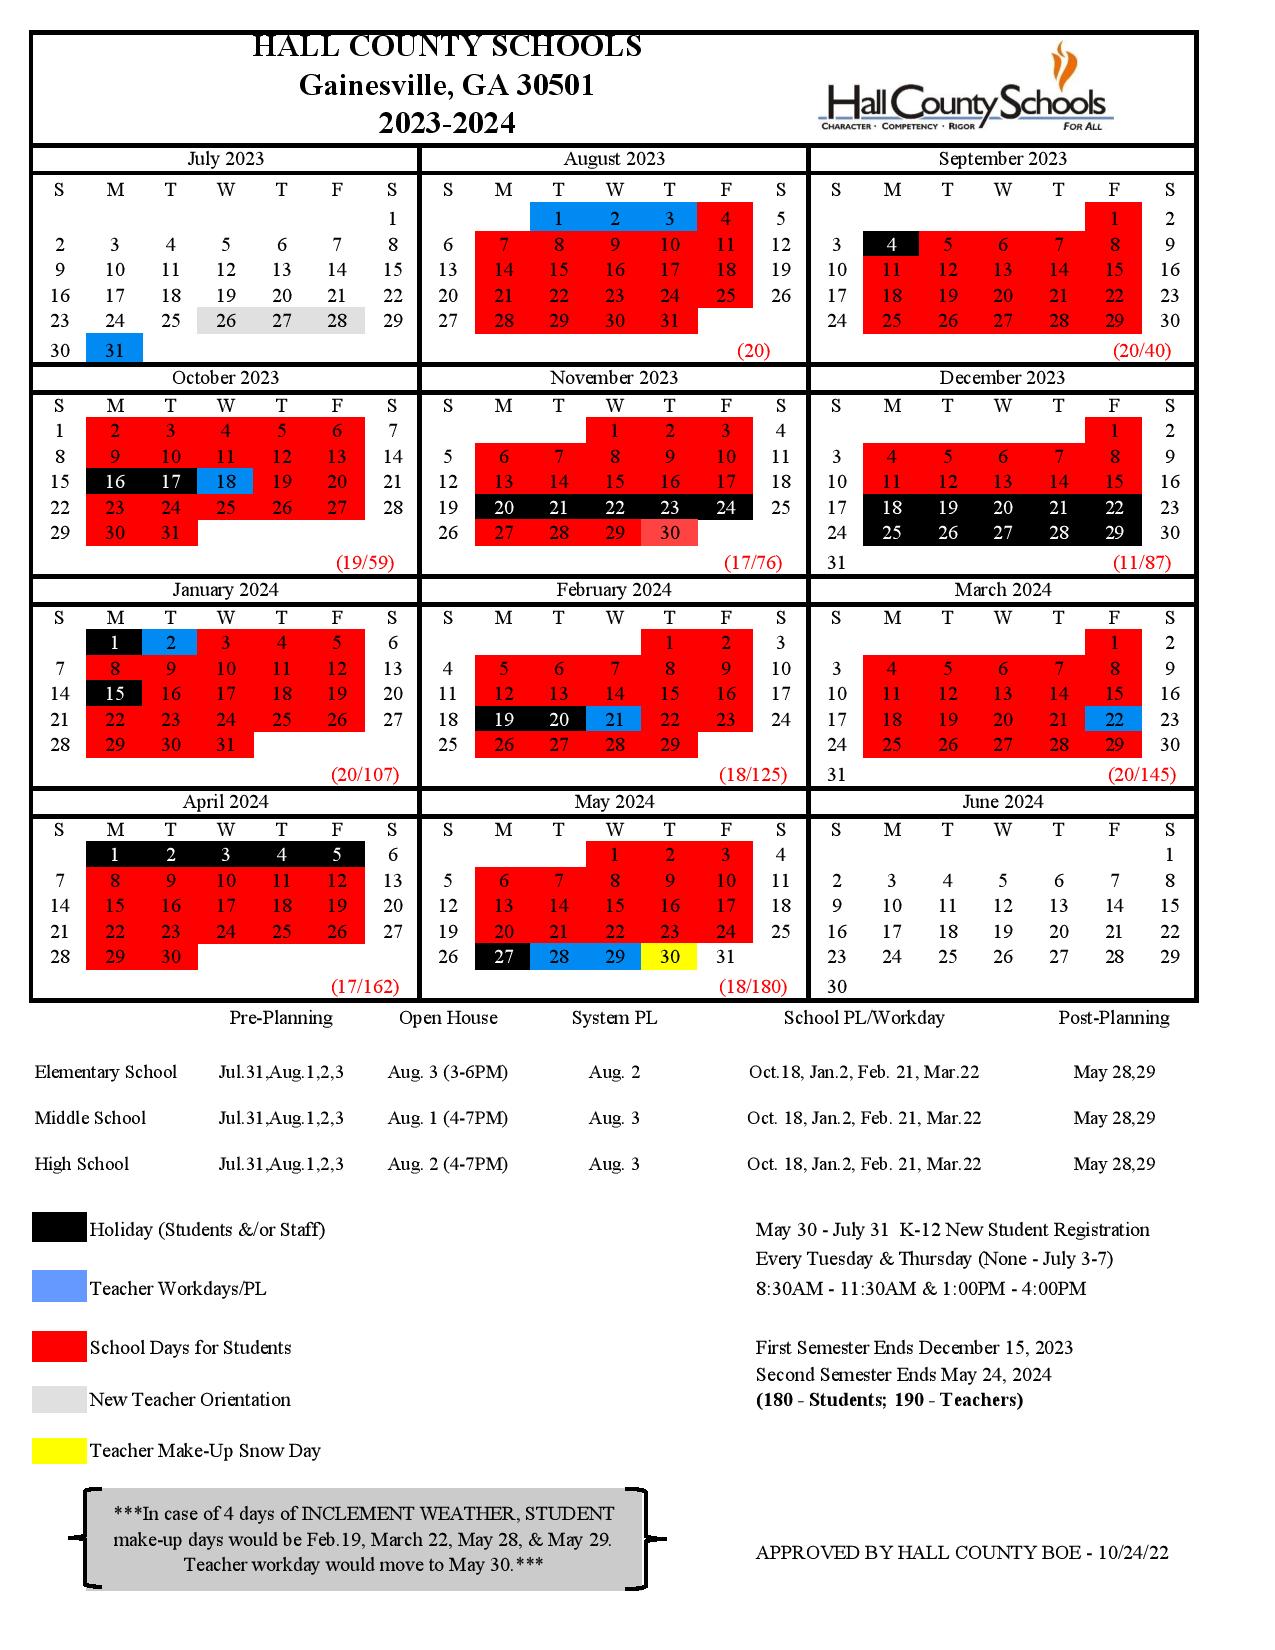 Hall County Schools Calendar Holidays 20232024